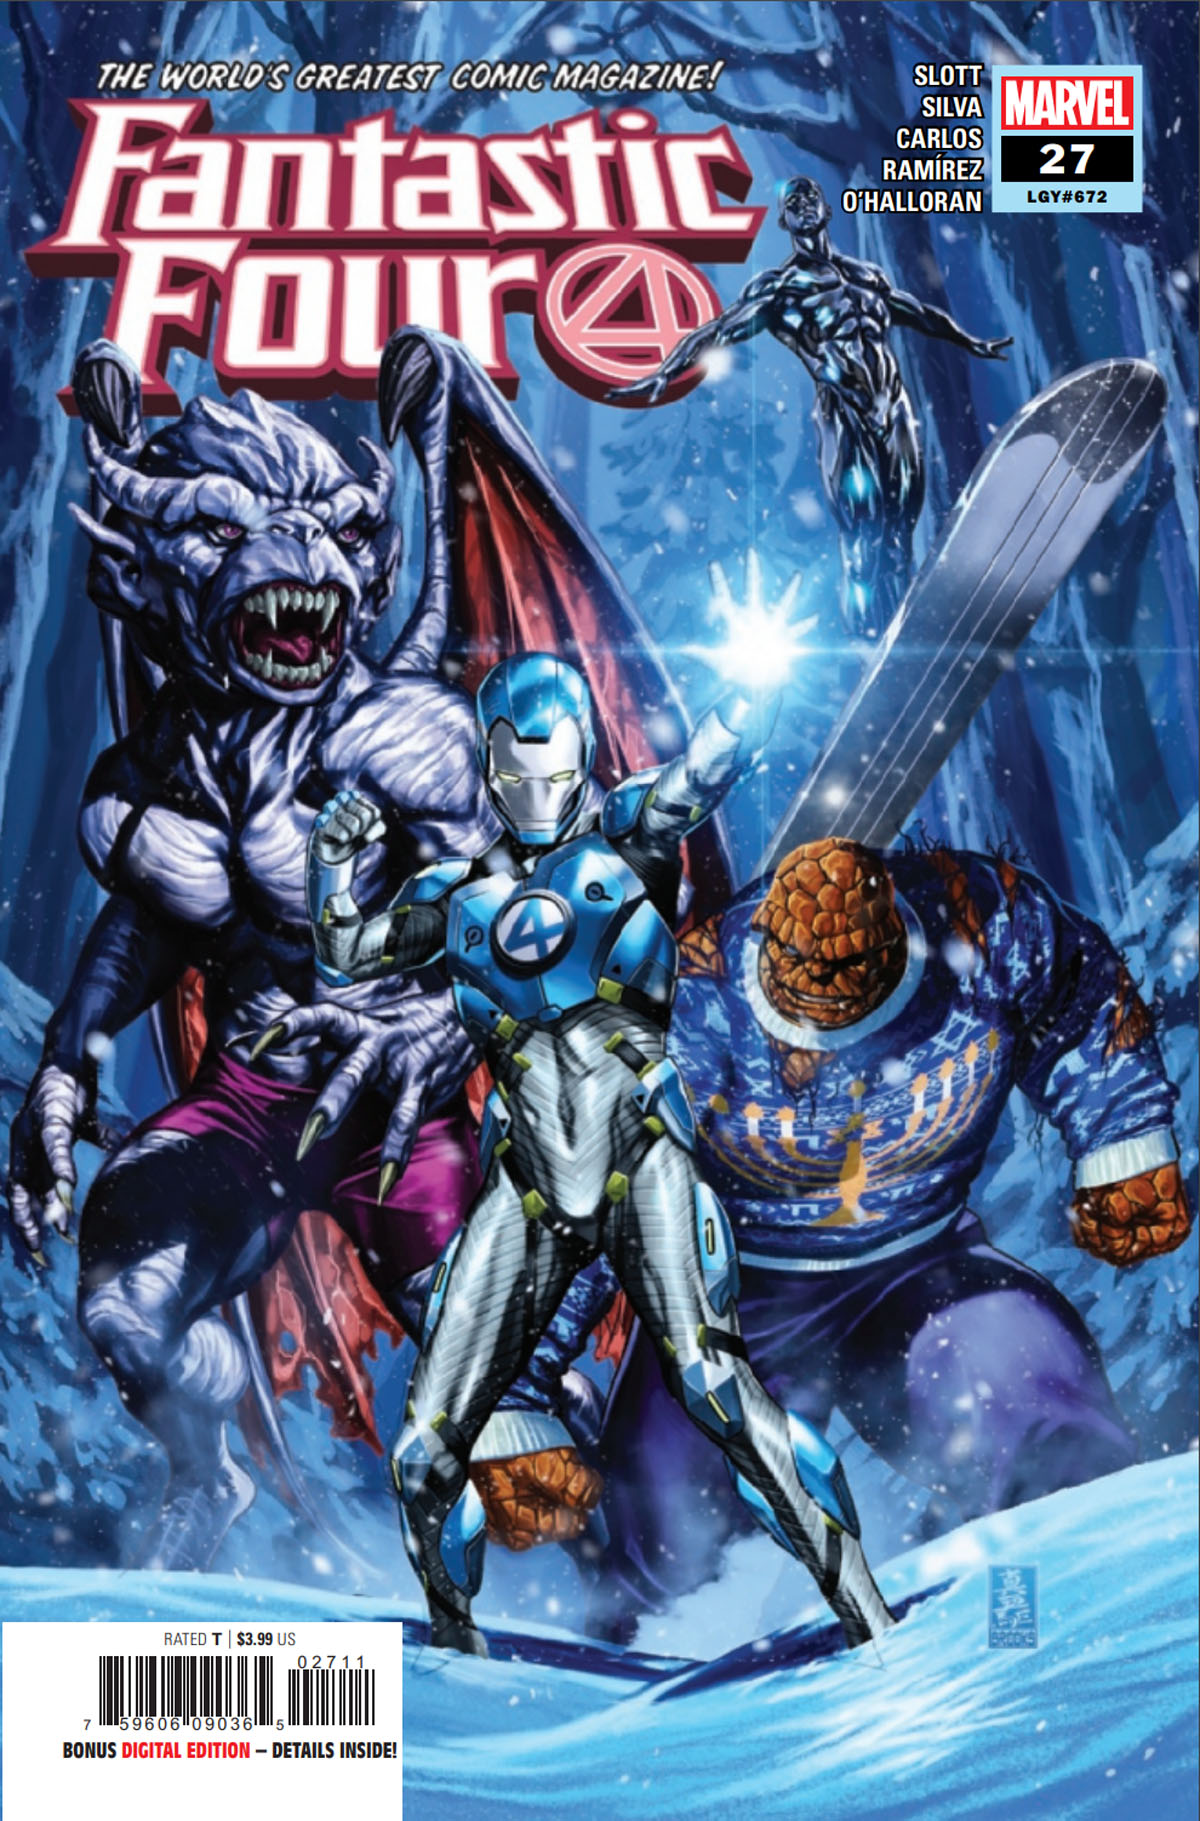 Fantastic Four #27 cover